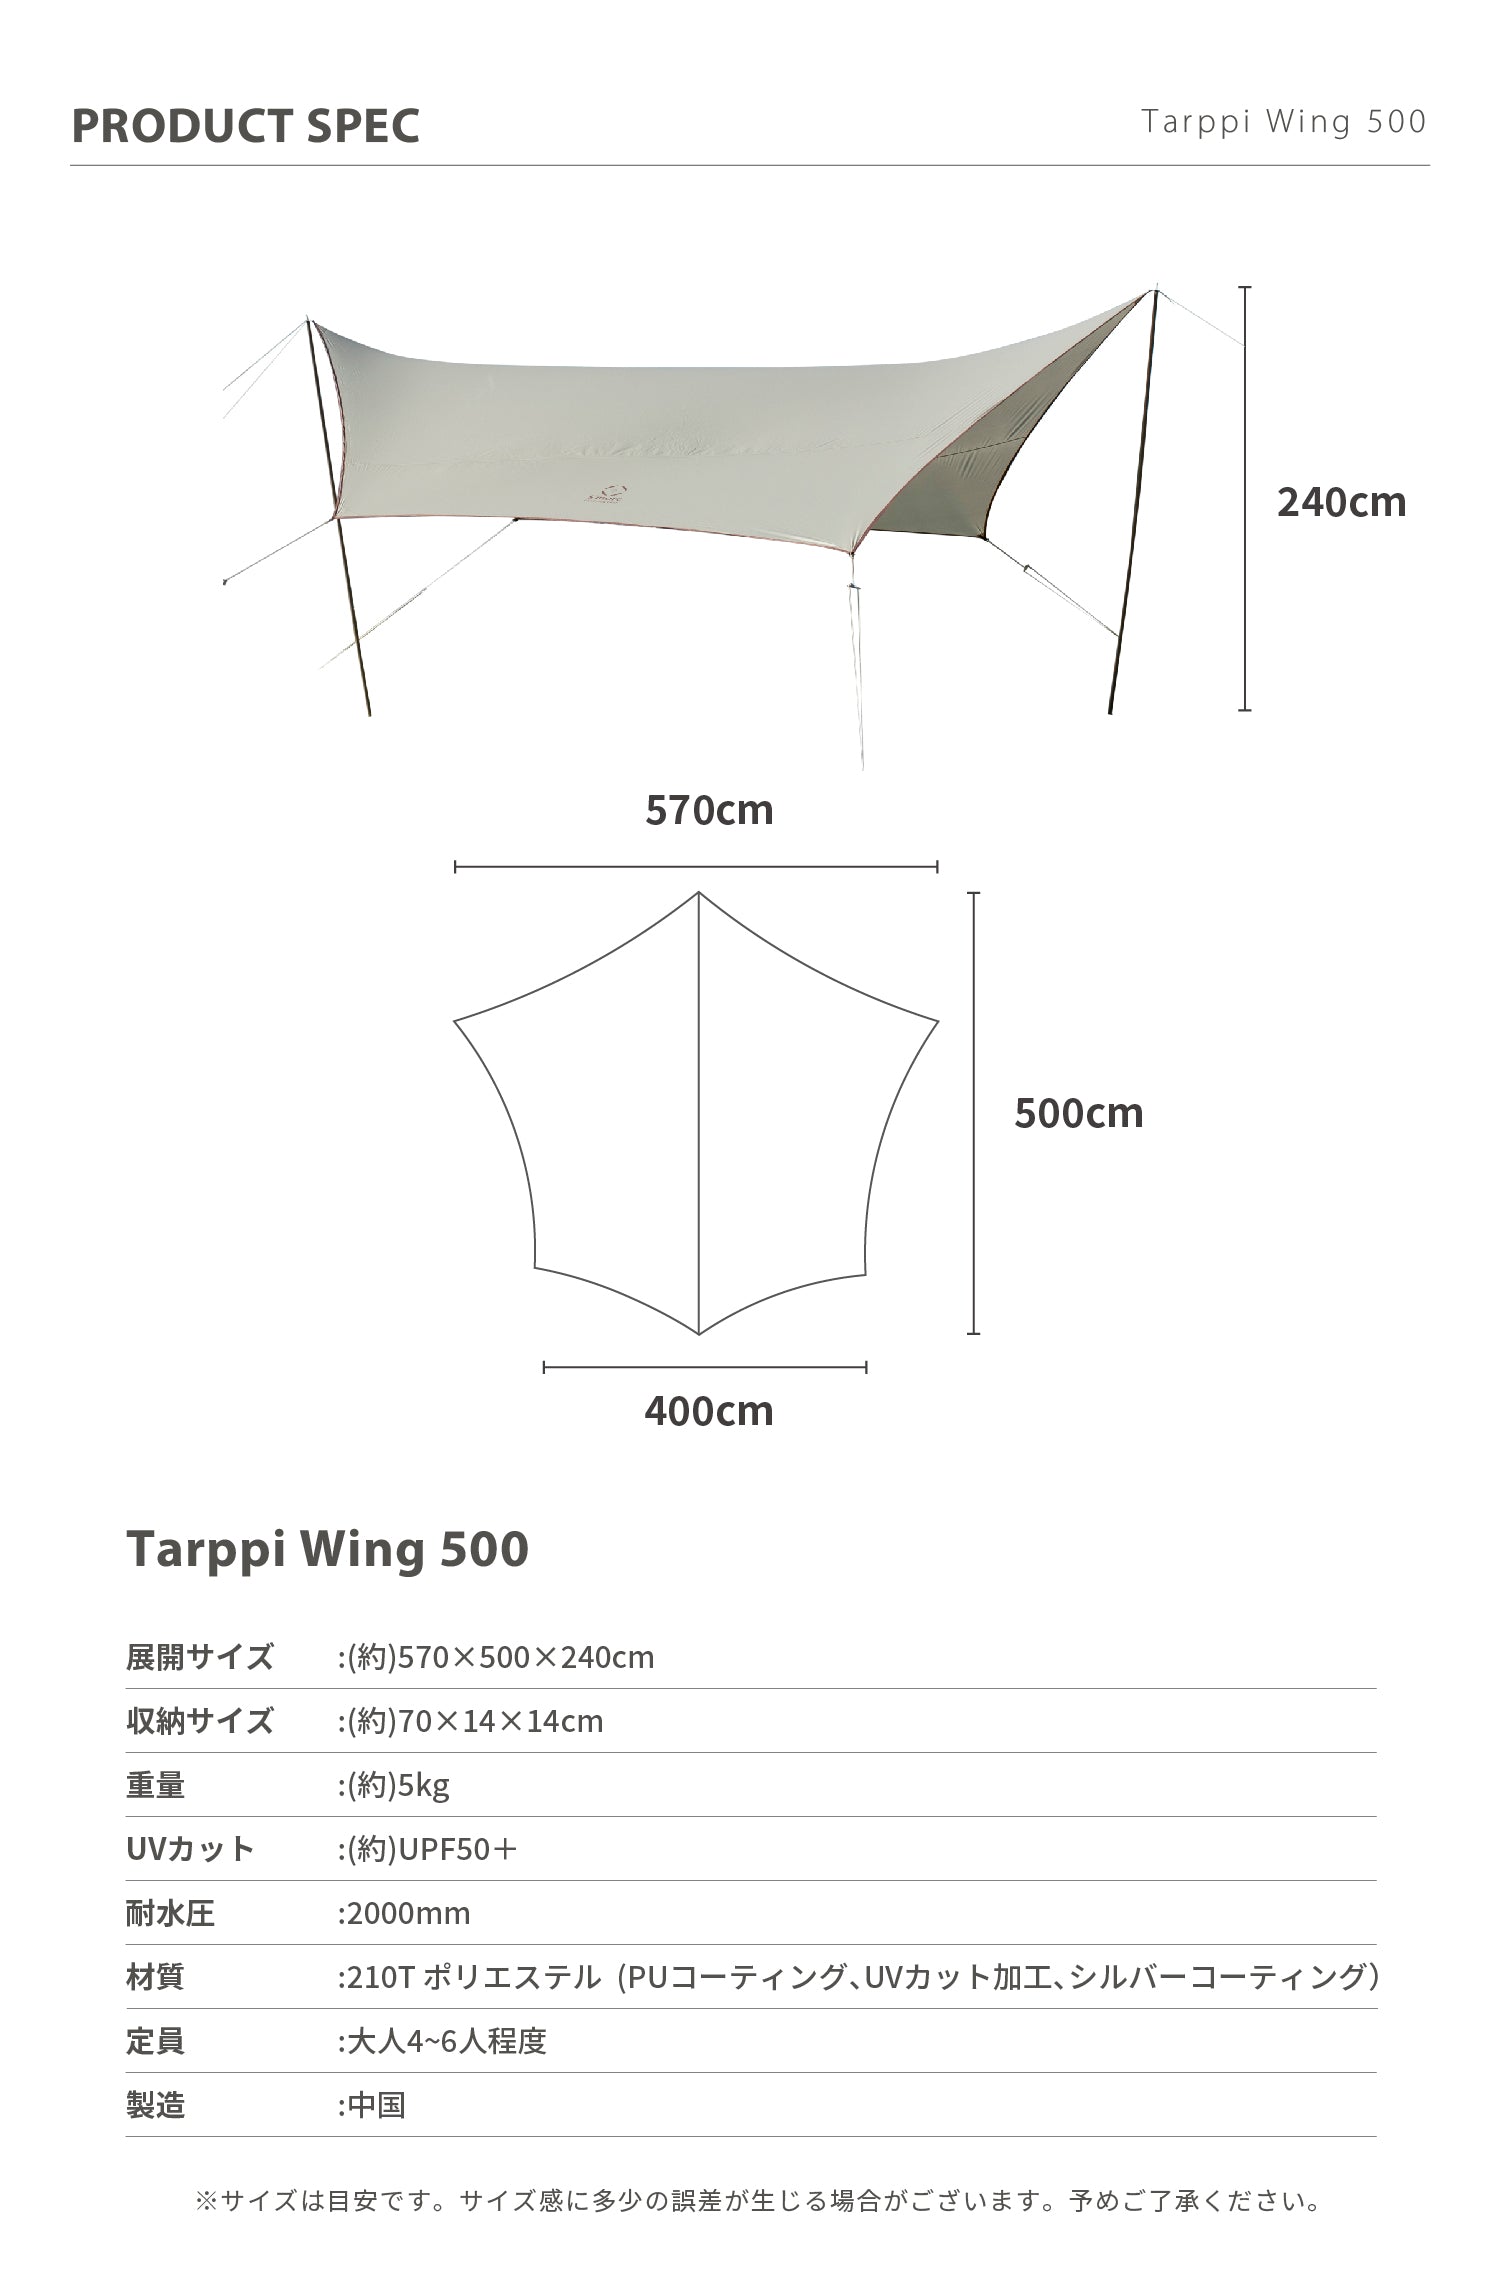 New!!【 Tarppi Wing 500 】タープウイング500 – S'more